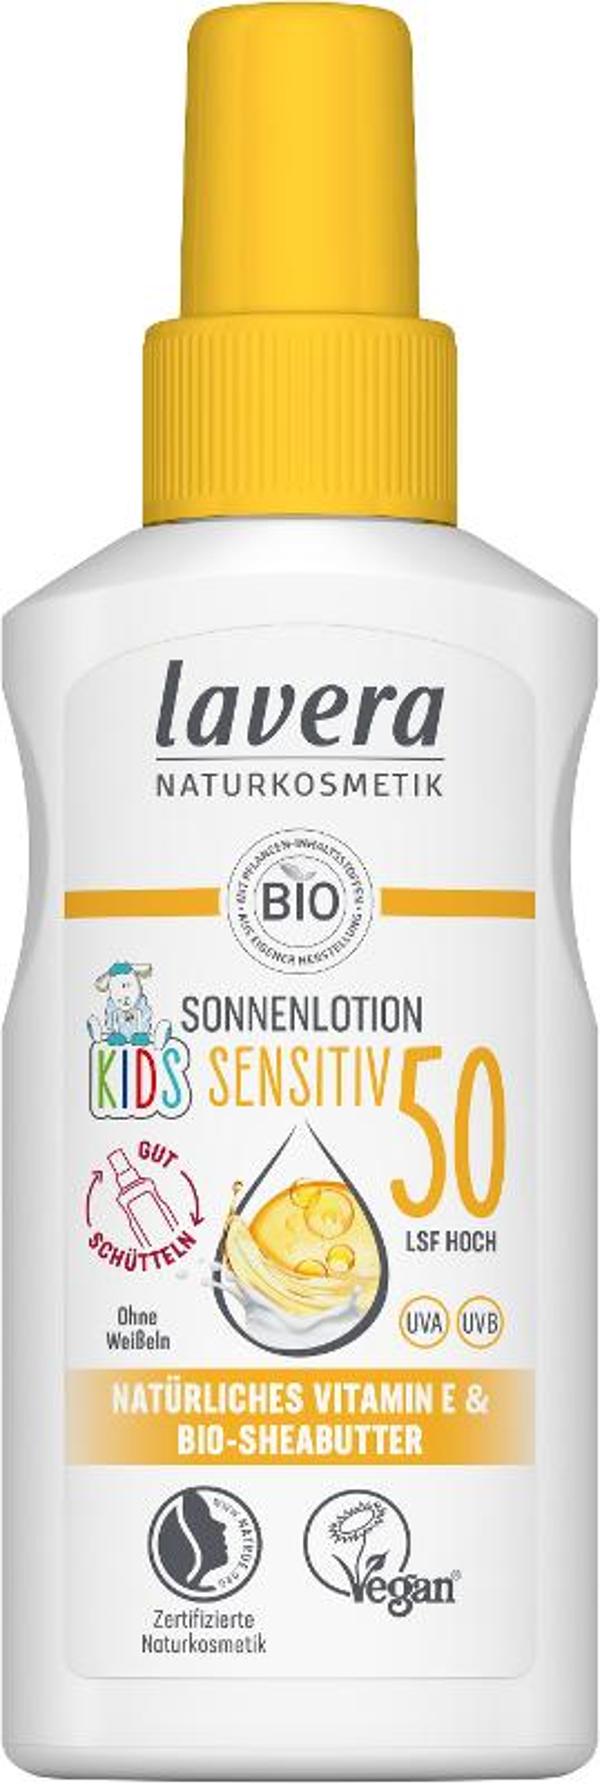 Produktfoto zu Sensitiv Sonne Kids LSF 50